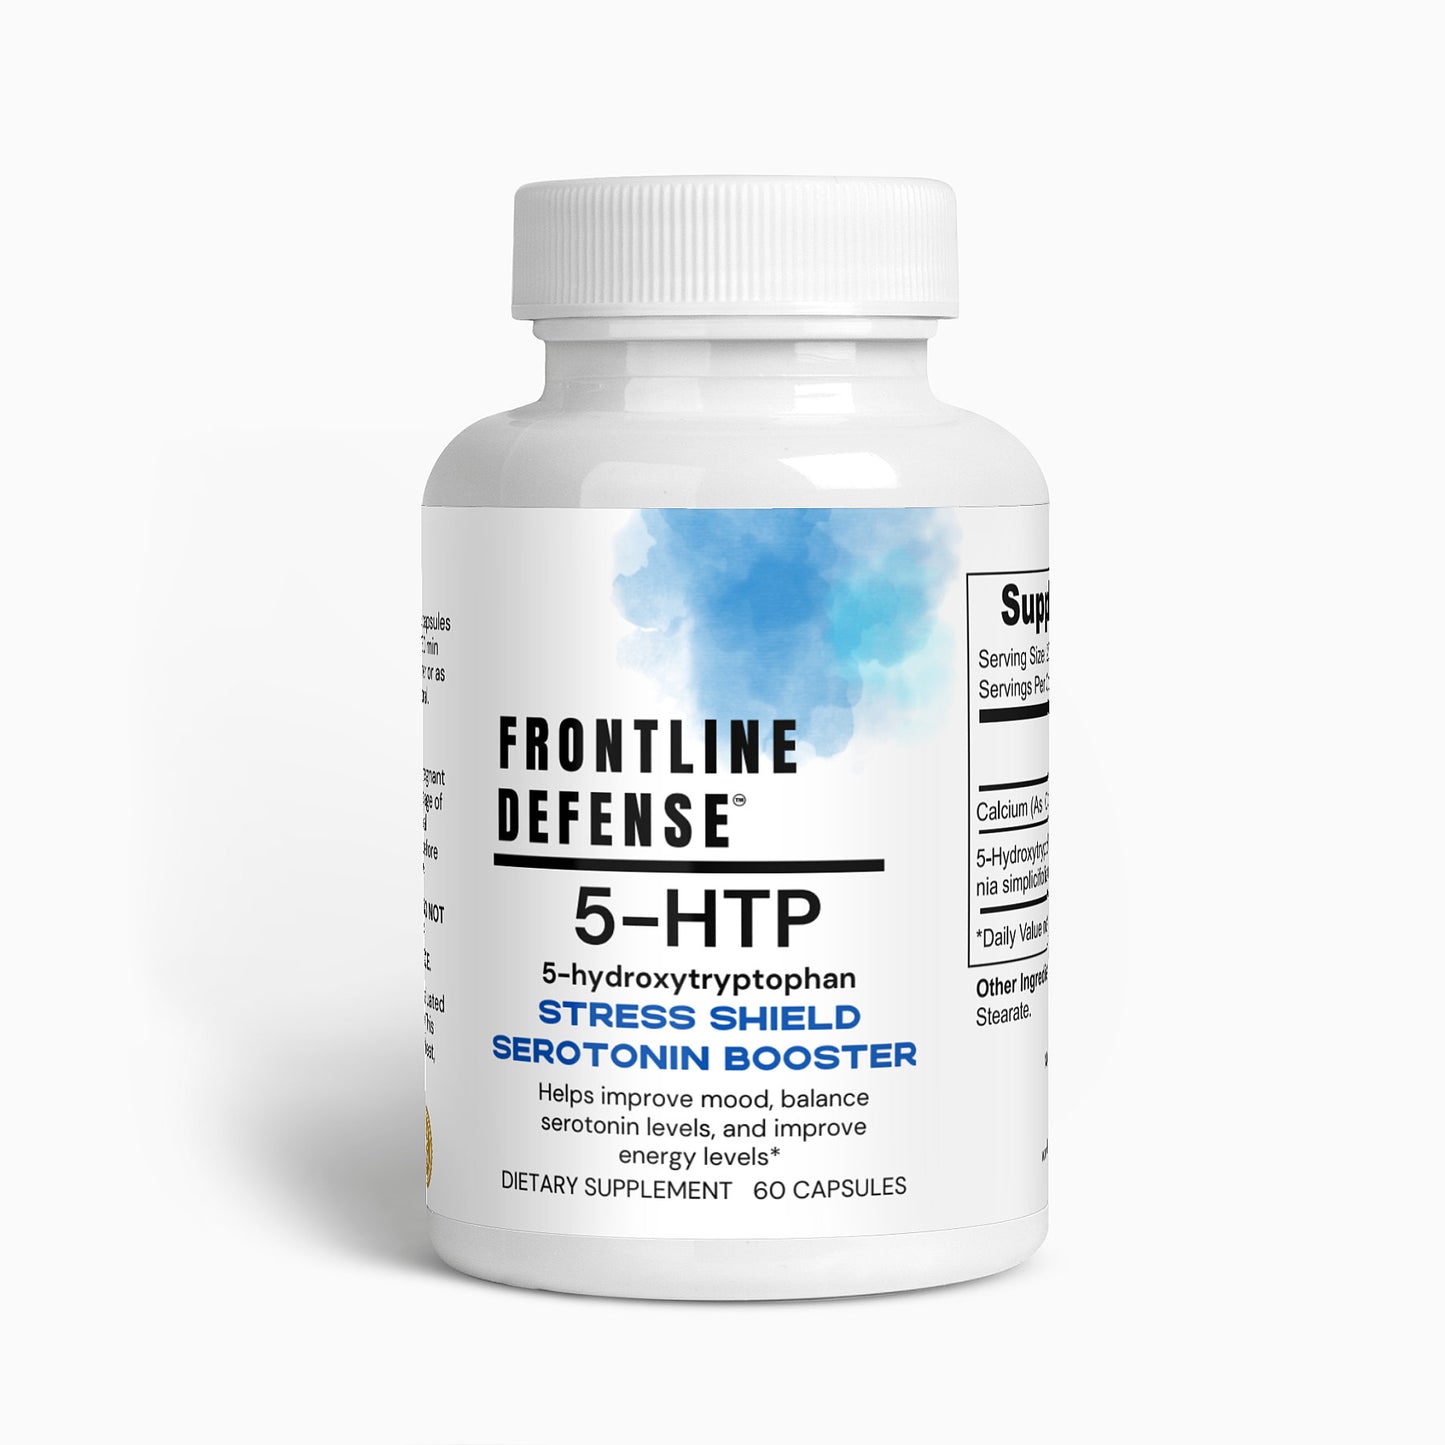 5-HTP Stress Shield Serotonin Booster